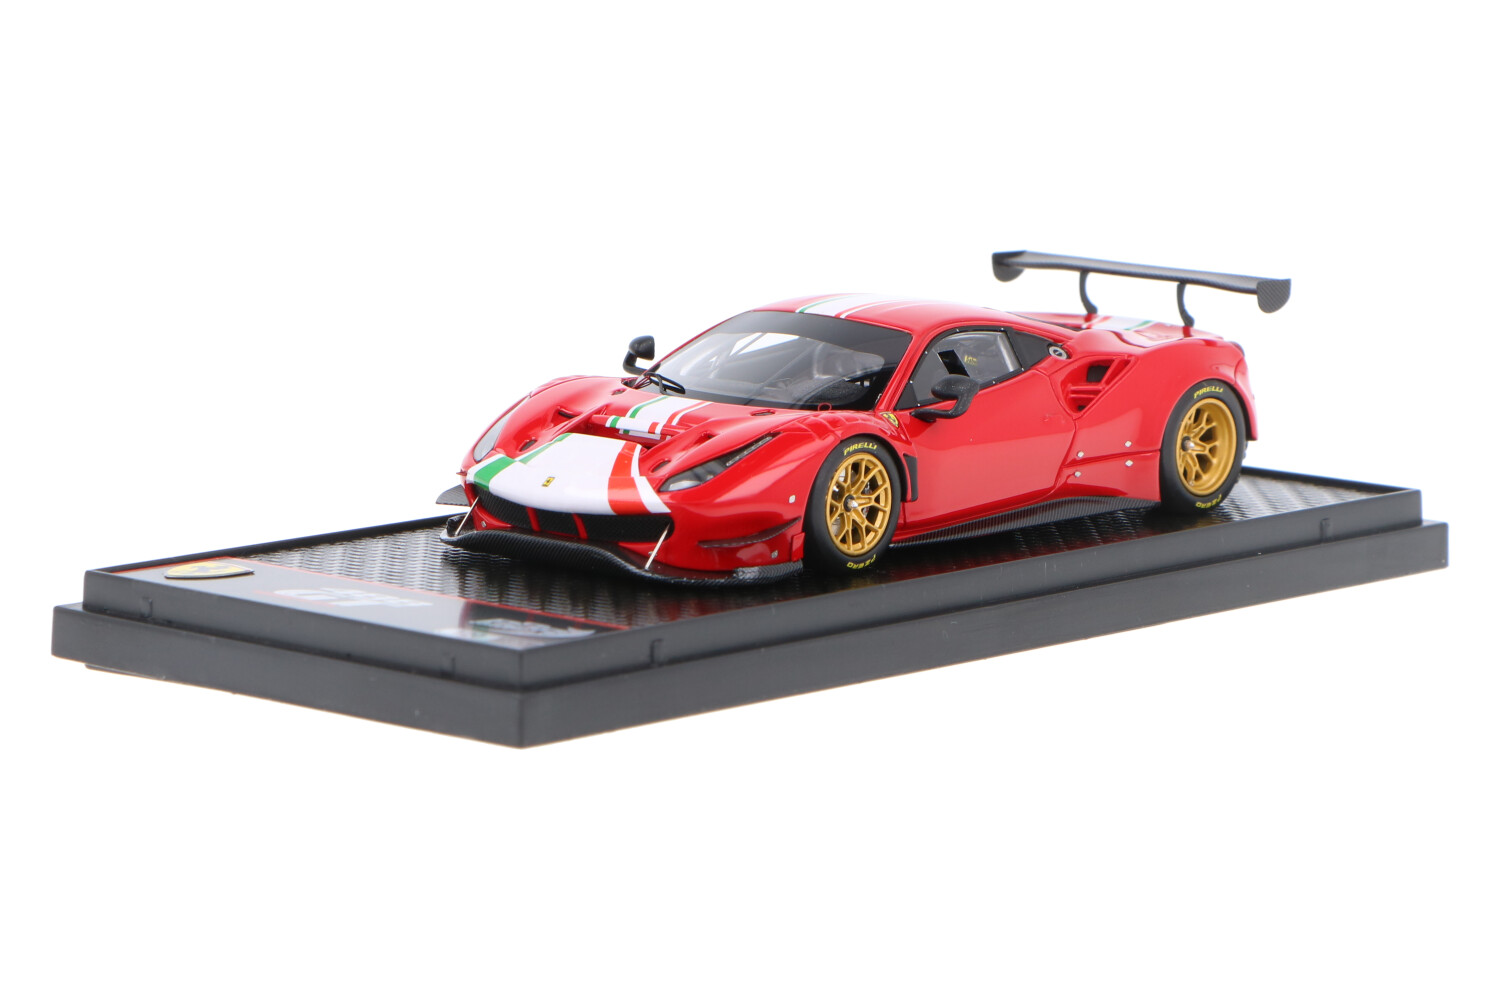 Ferrari 488 Modificata - Modelauto schaal 1:43